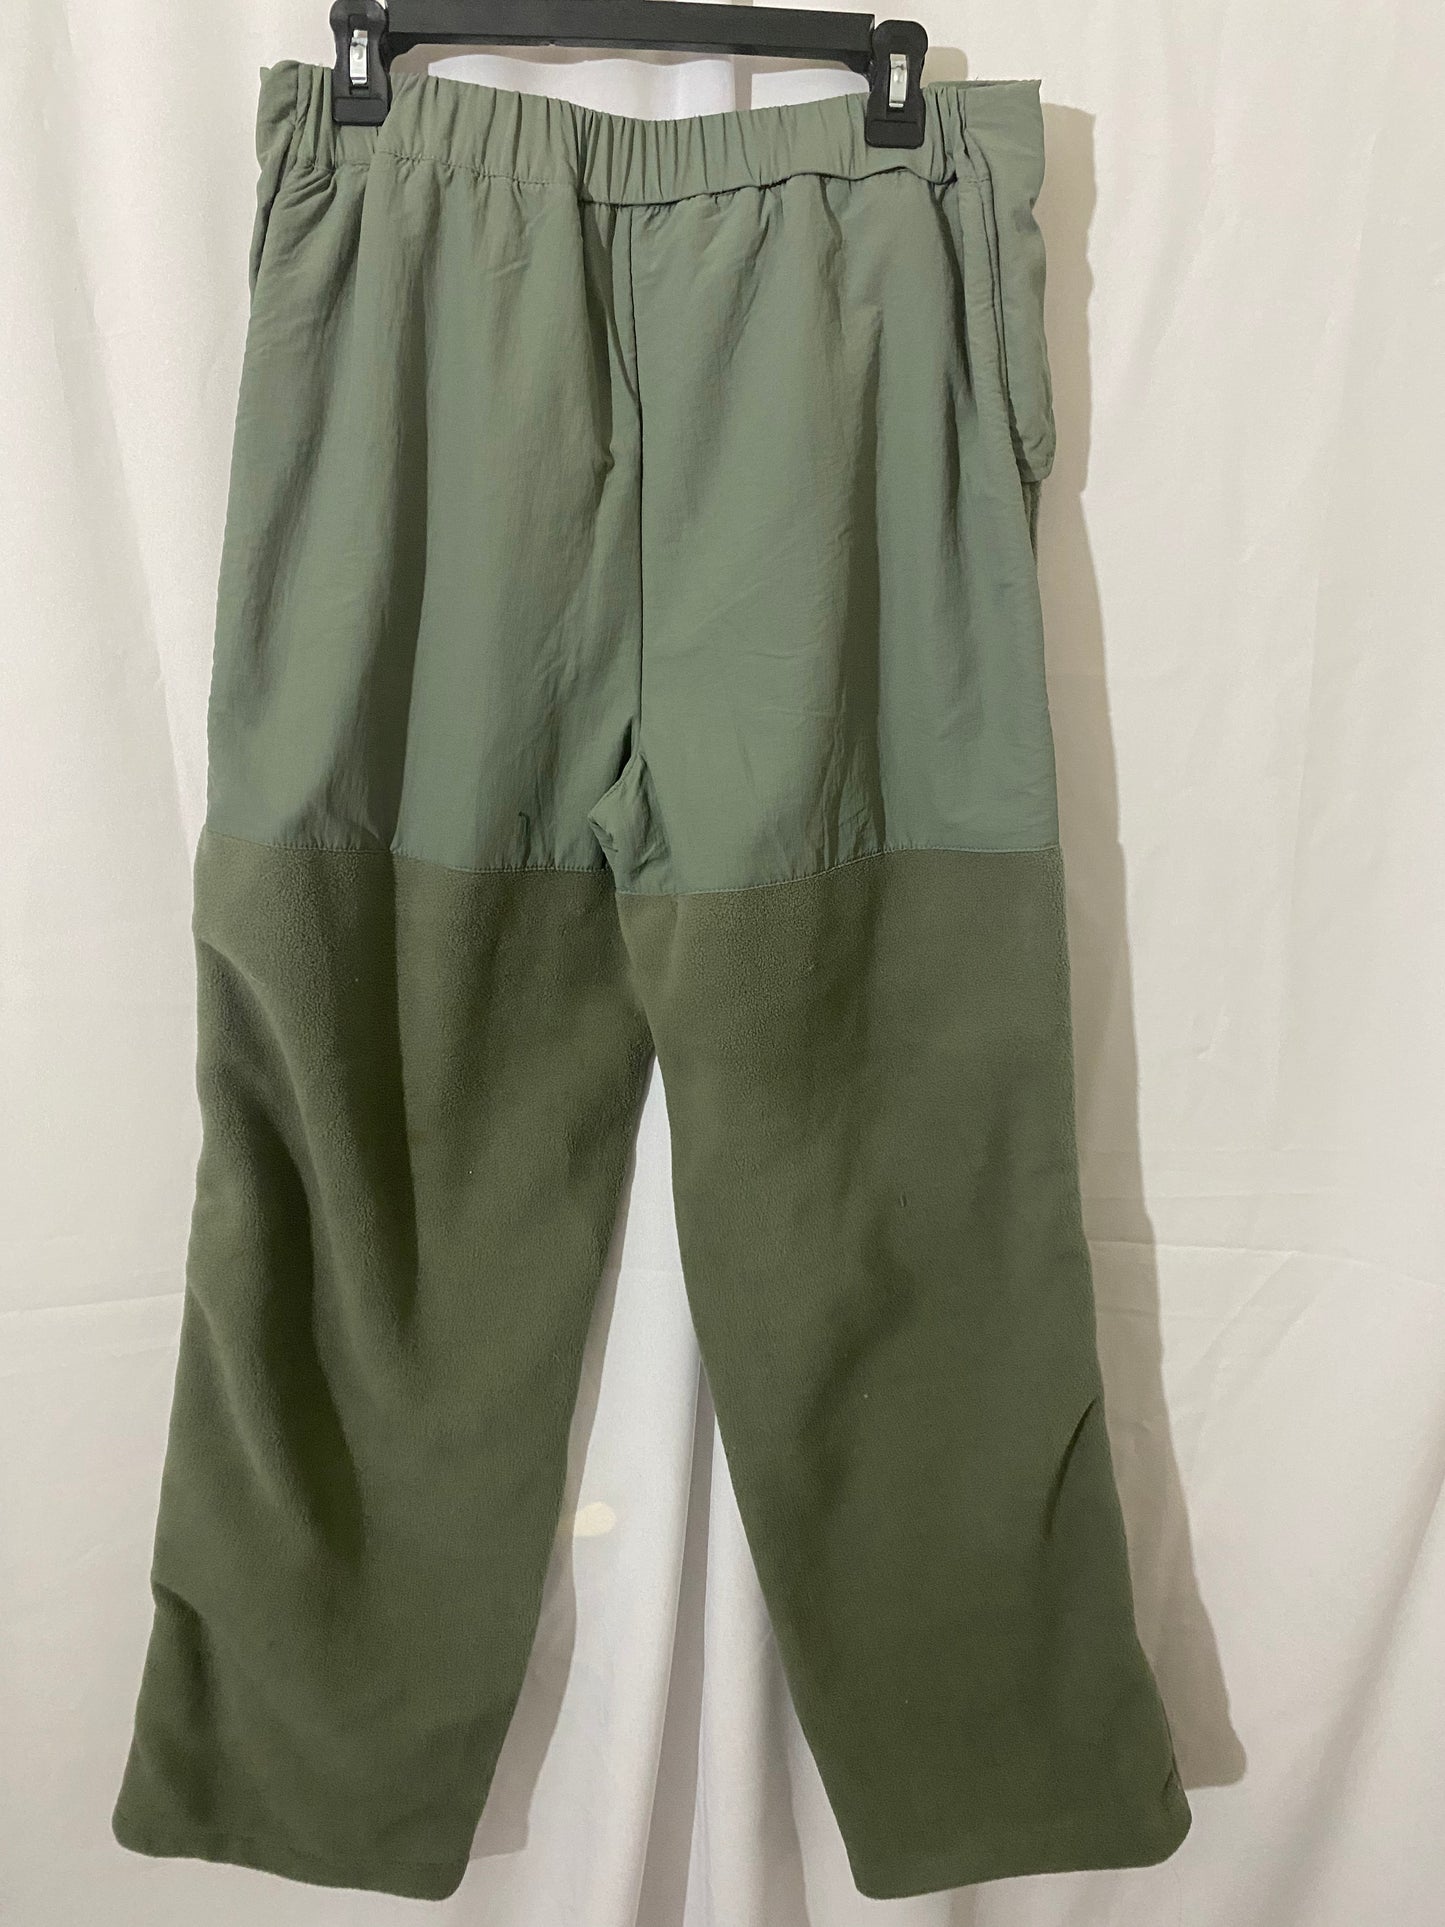 Light Green Military Fleece Pants